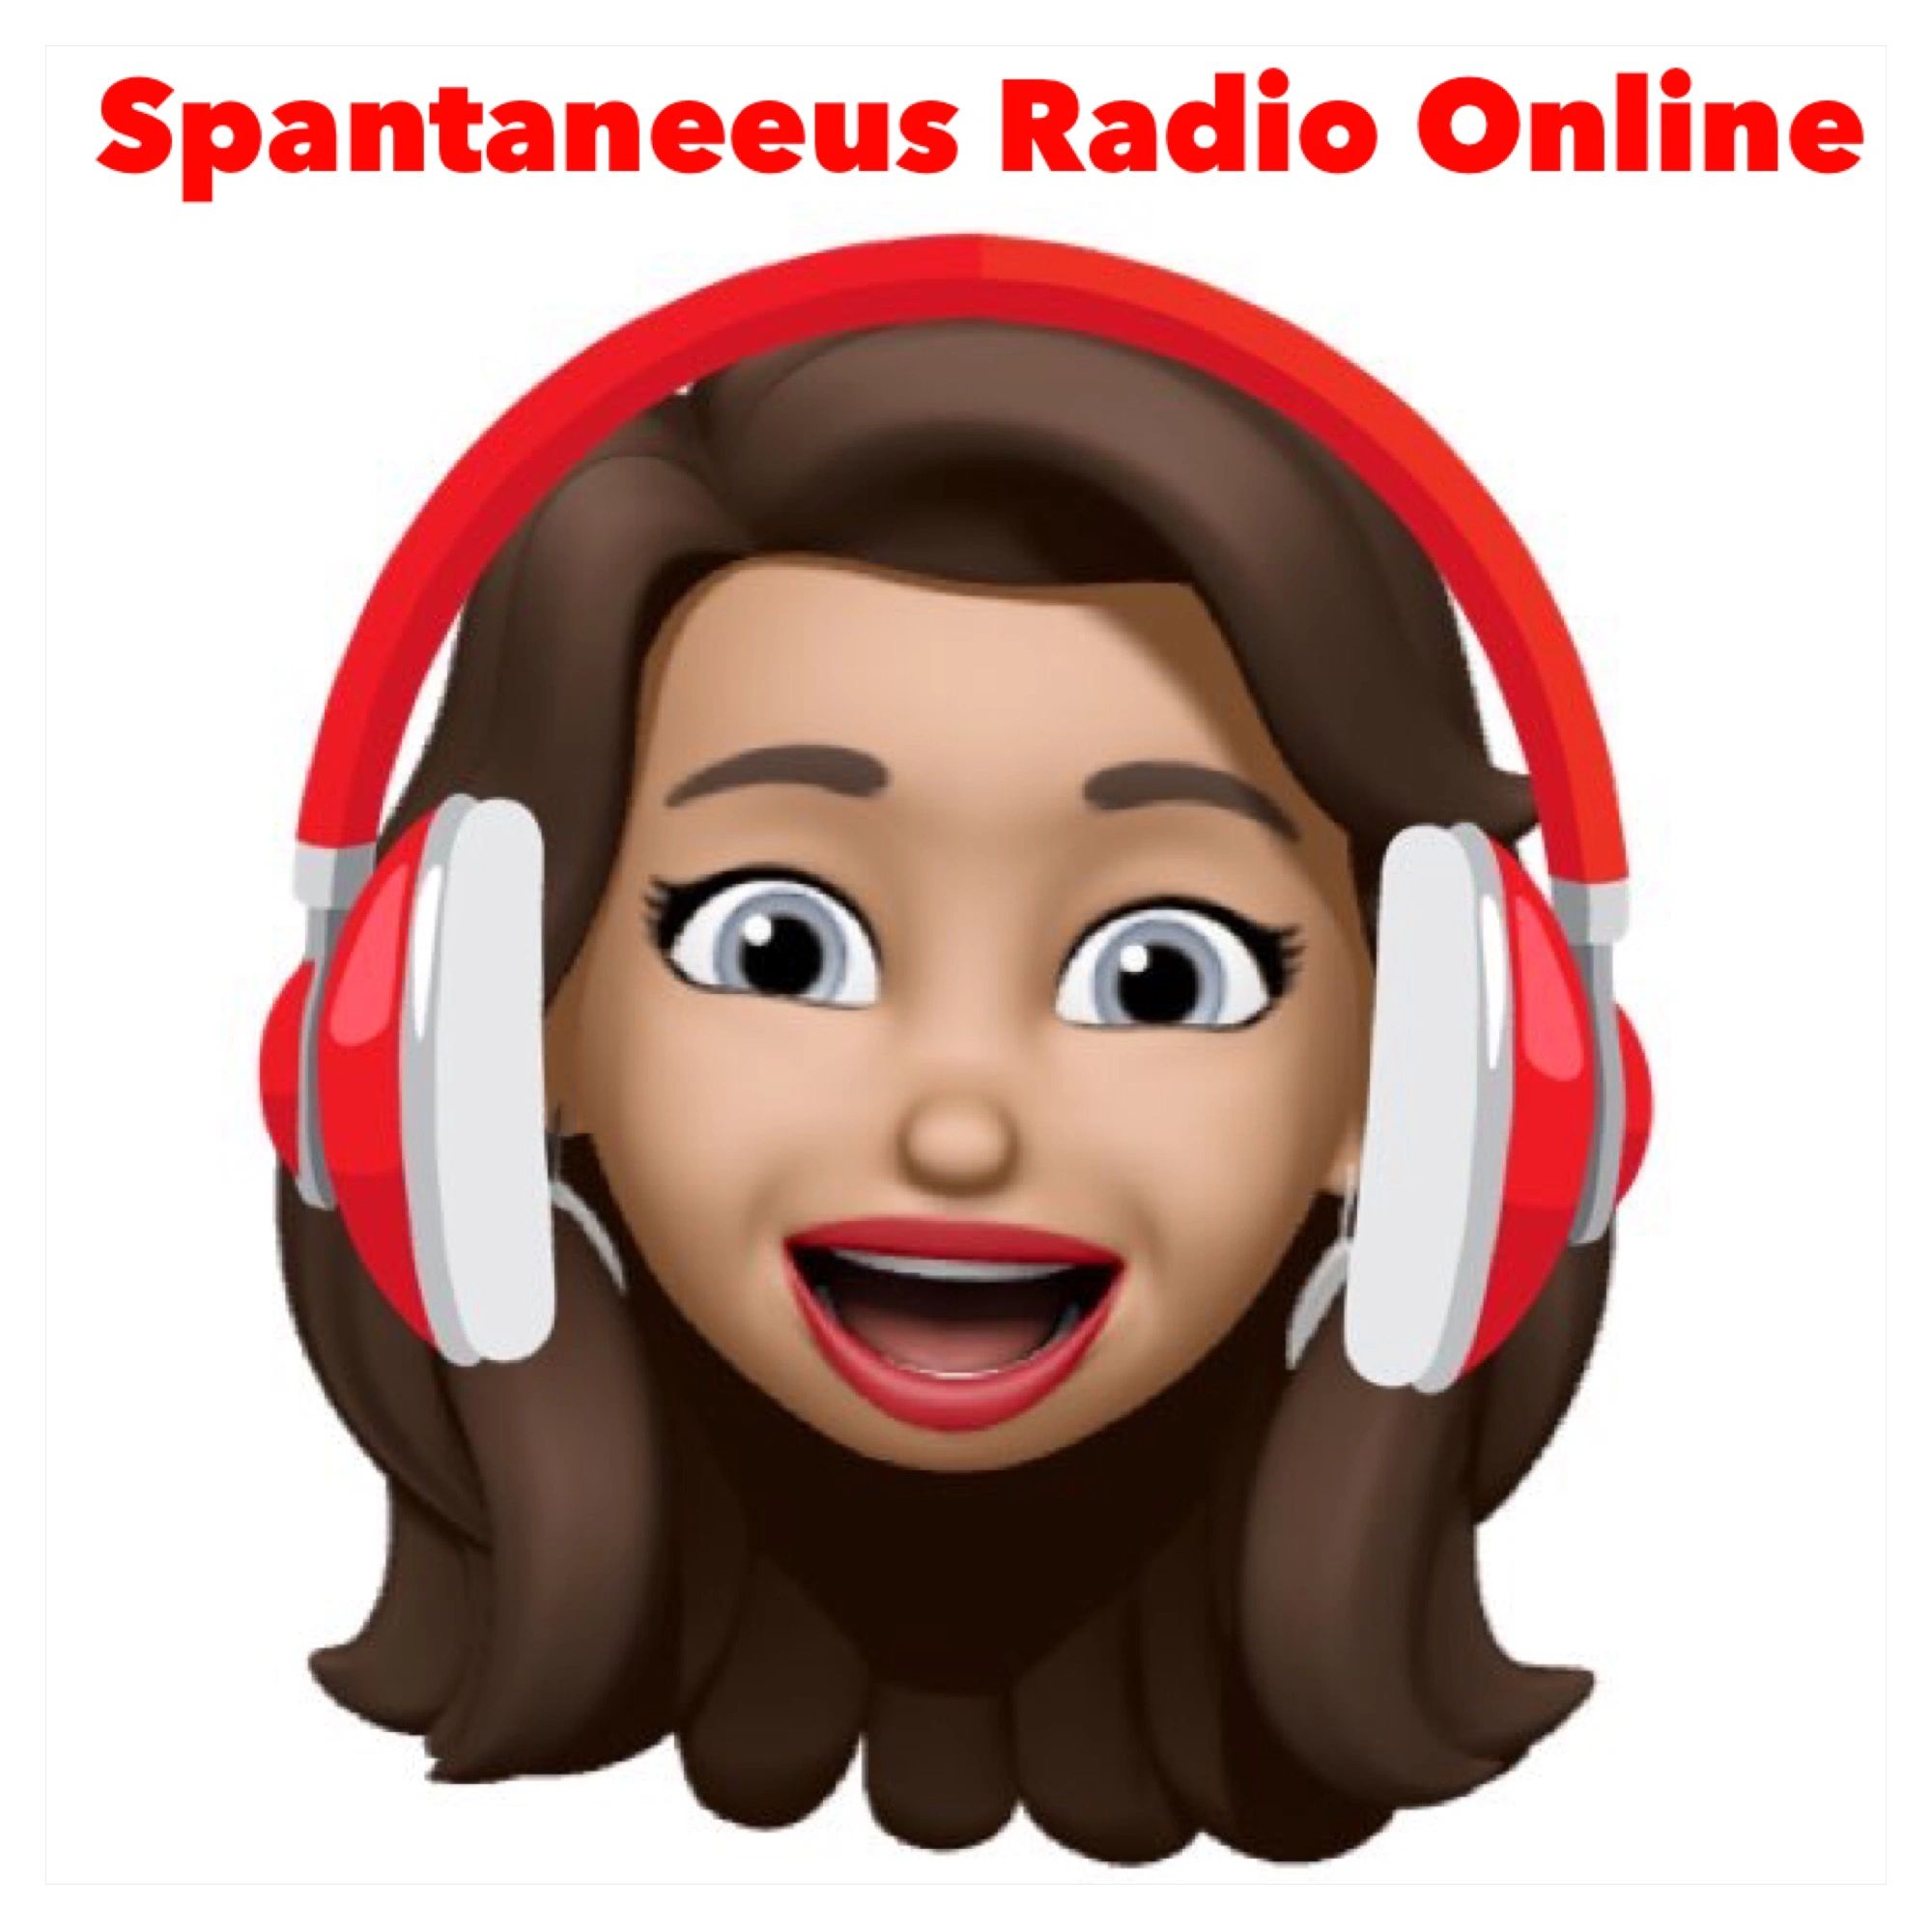 Spantaneeus Radio Online